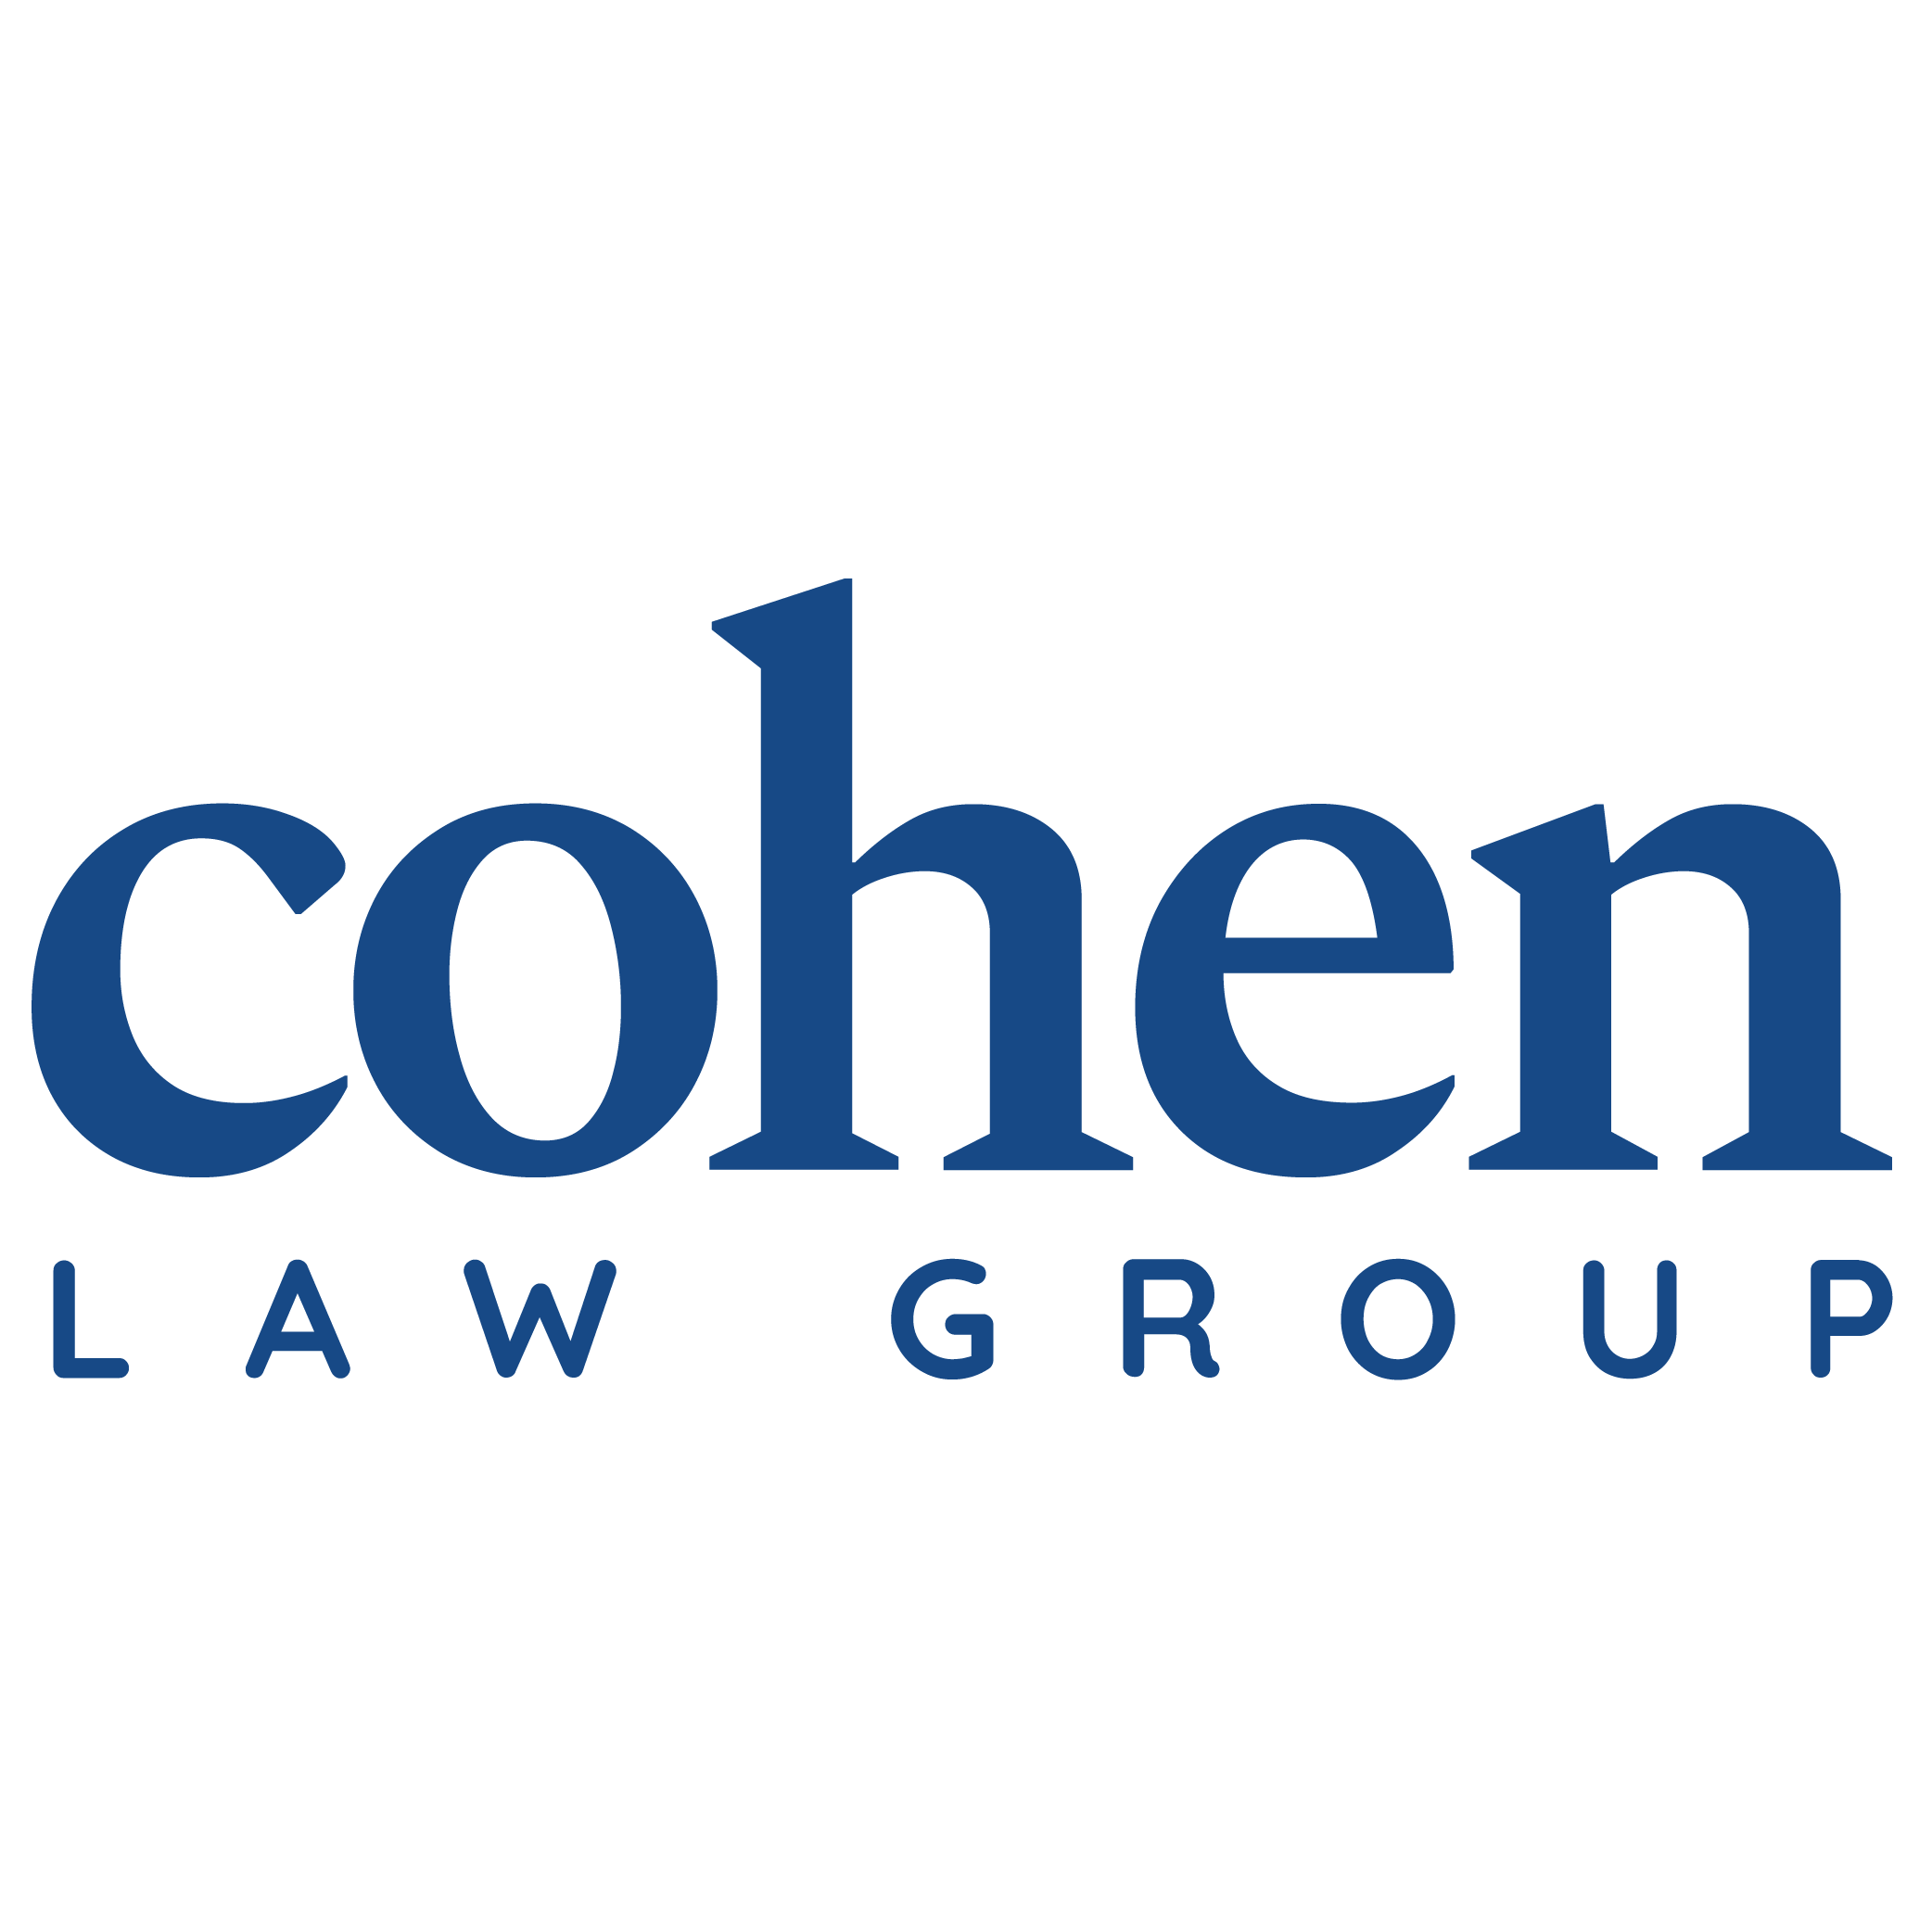 Cohen Law Group - Los Angeles, CA 90067 - (310)747-1883 | ShowMeLocal.com